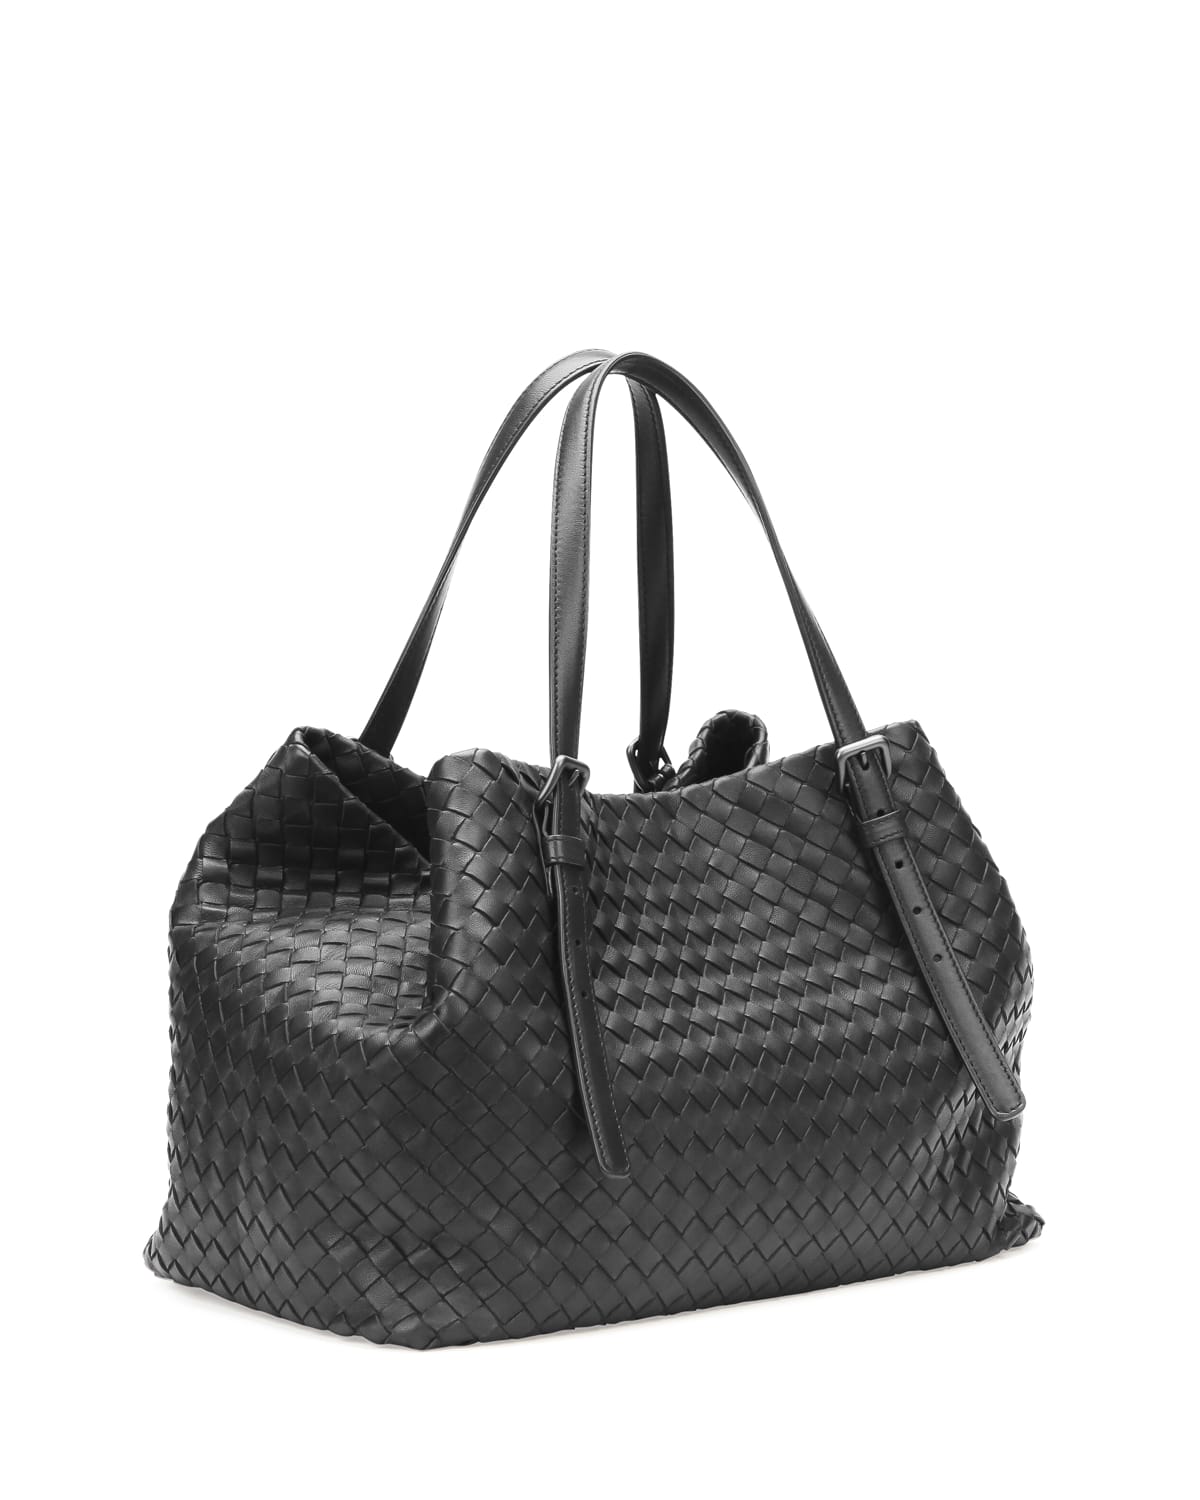 Neiman Marcus Black Tote Bag Make -Up Travel Bag